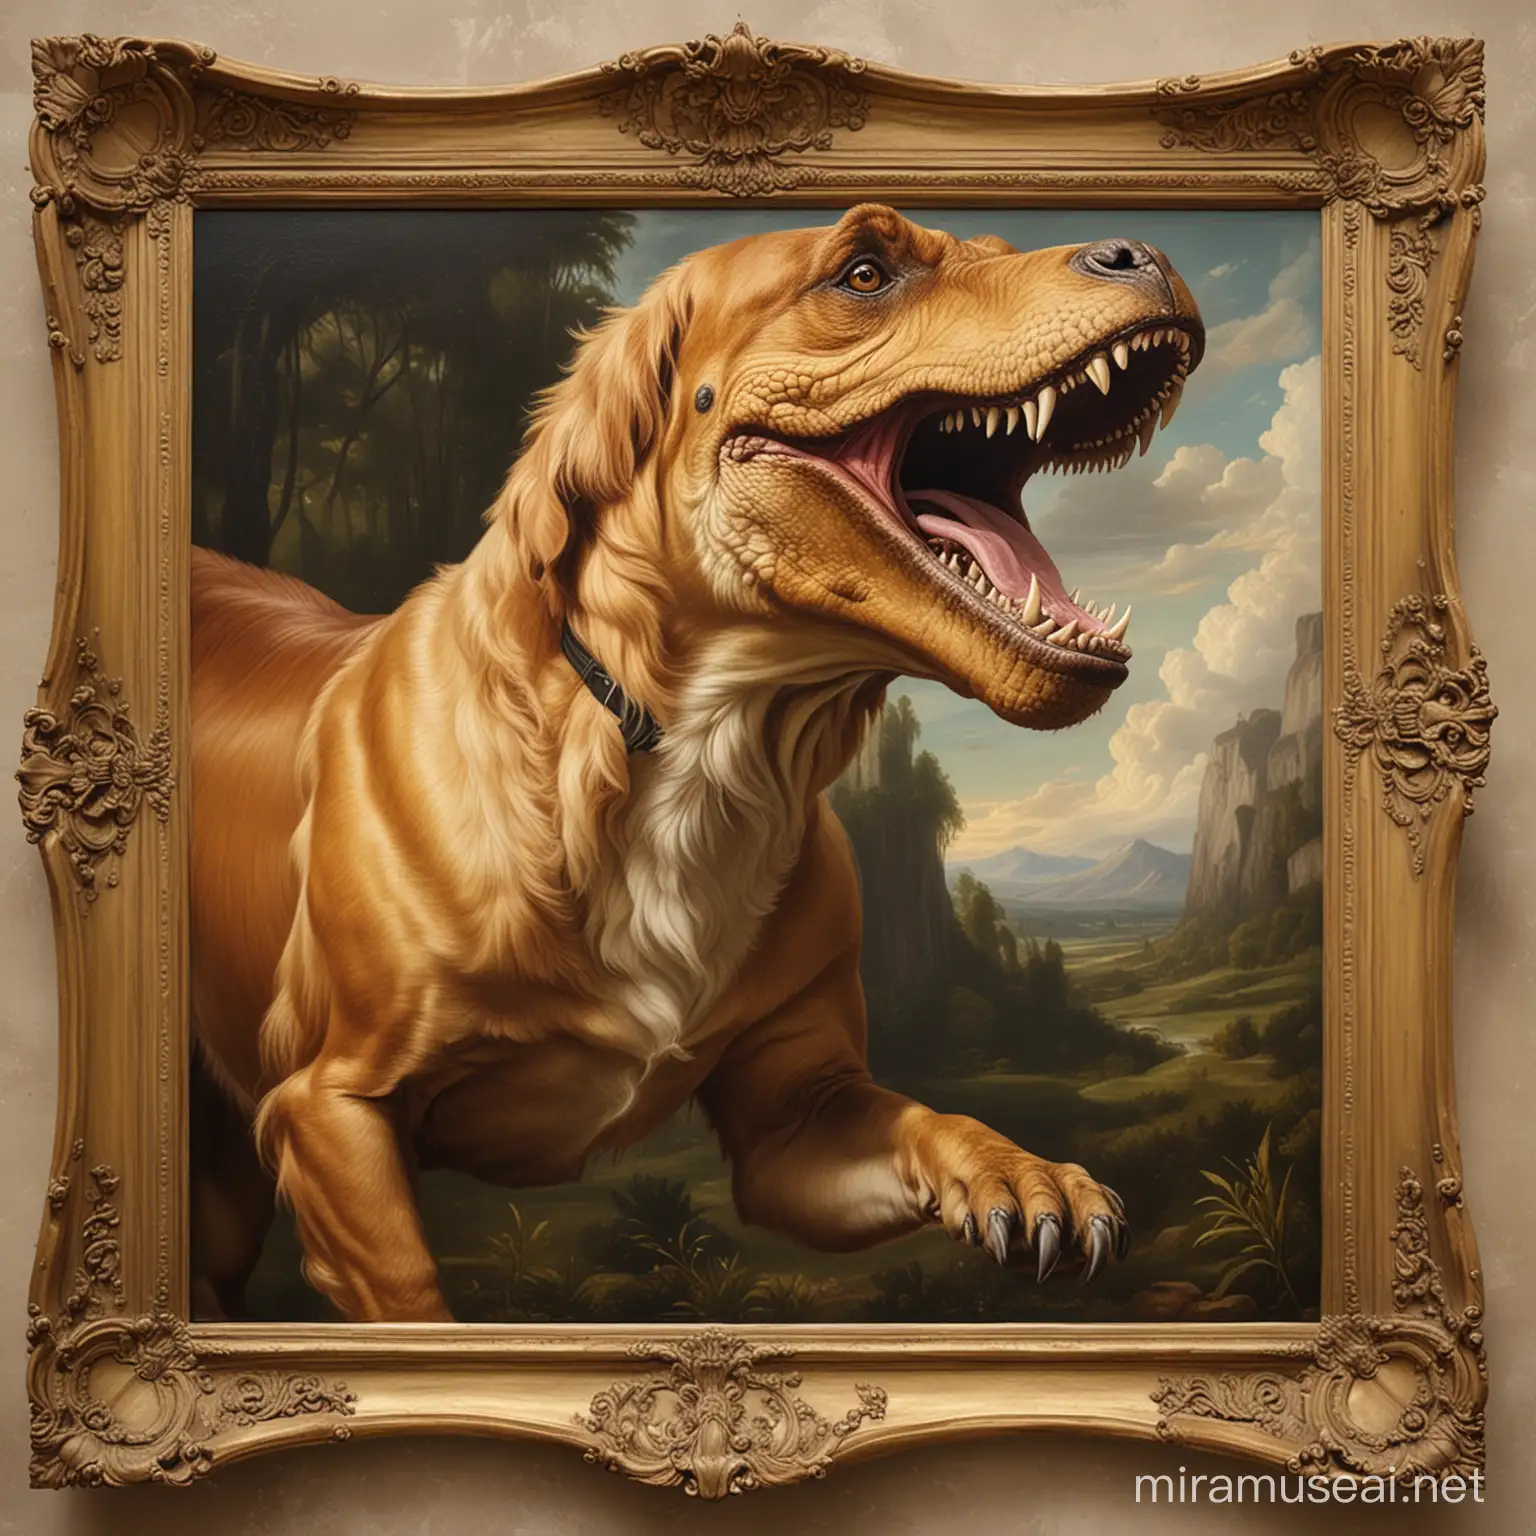 A renaissance style painting, a Tyrannosaurus rex mixed with a golden retriever.  